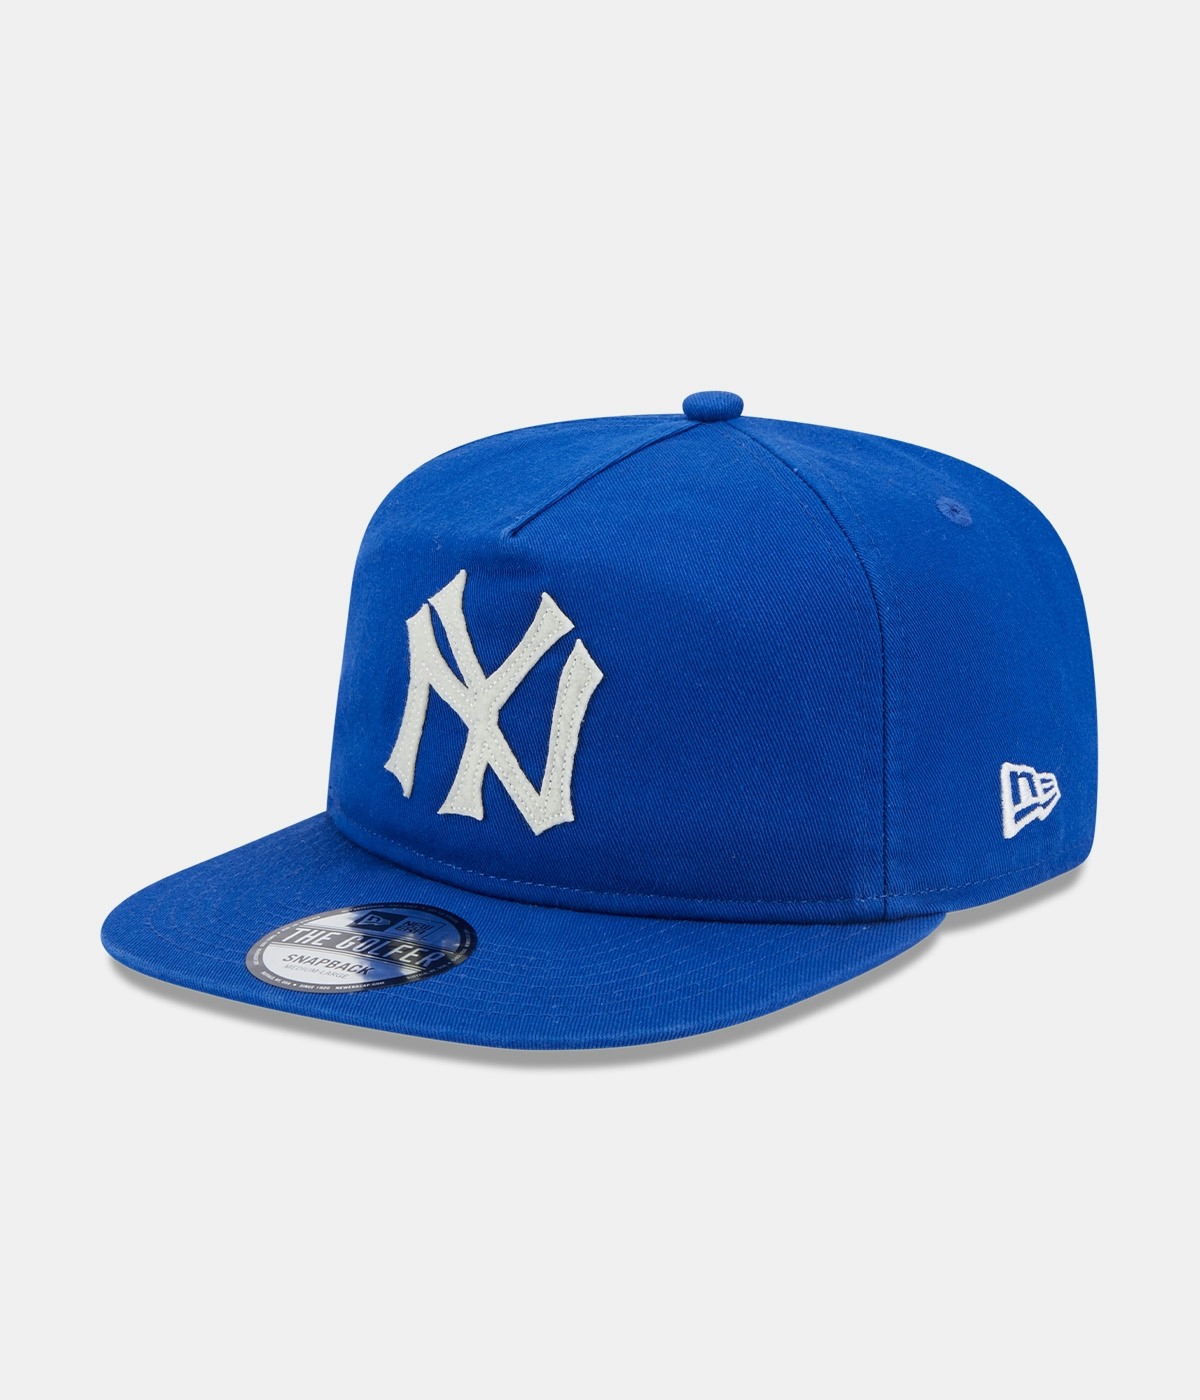 New Era Mlb World Series Golfer New York Yankees Cap Blue